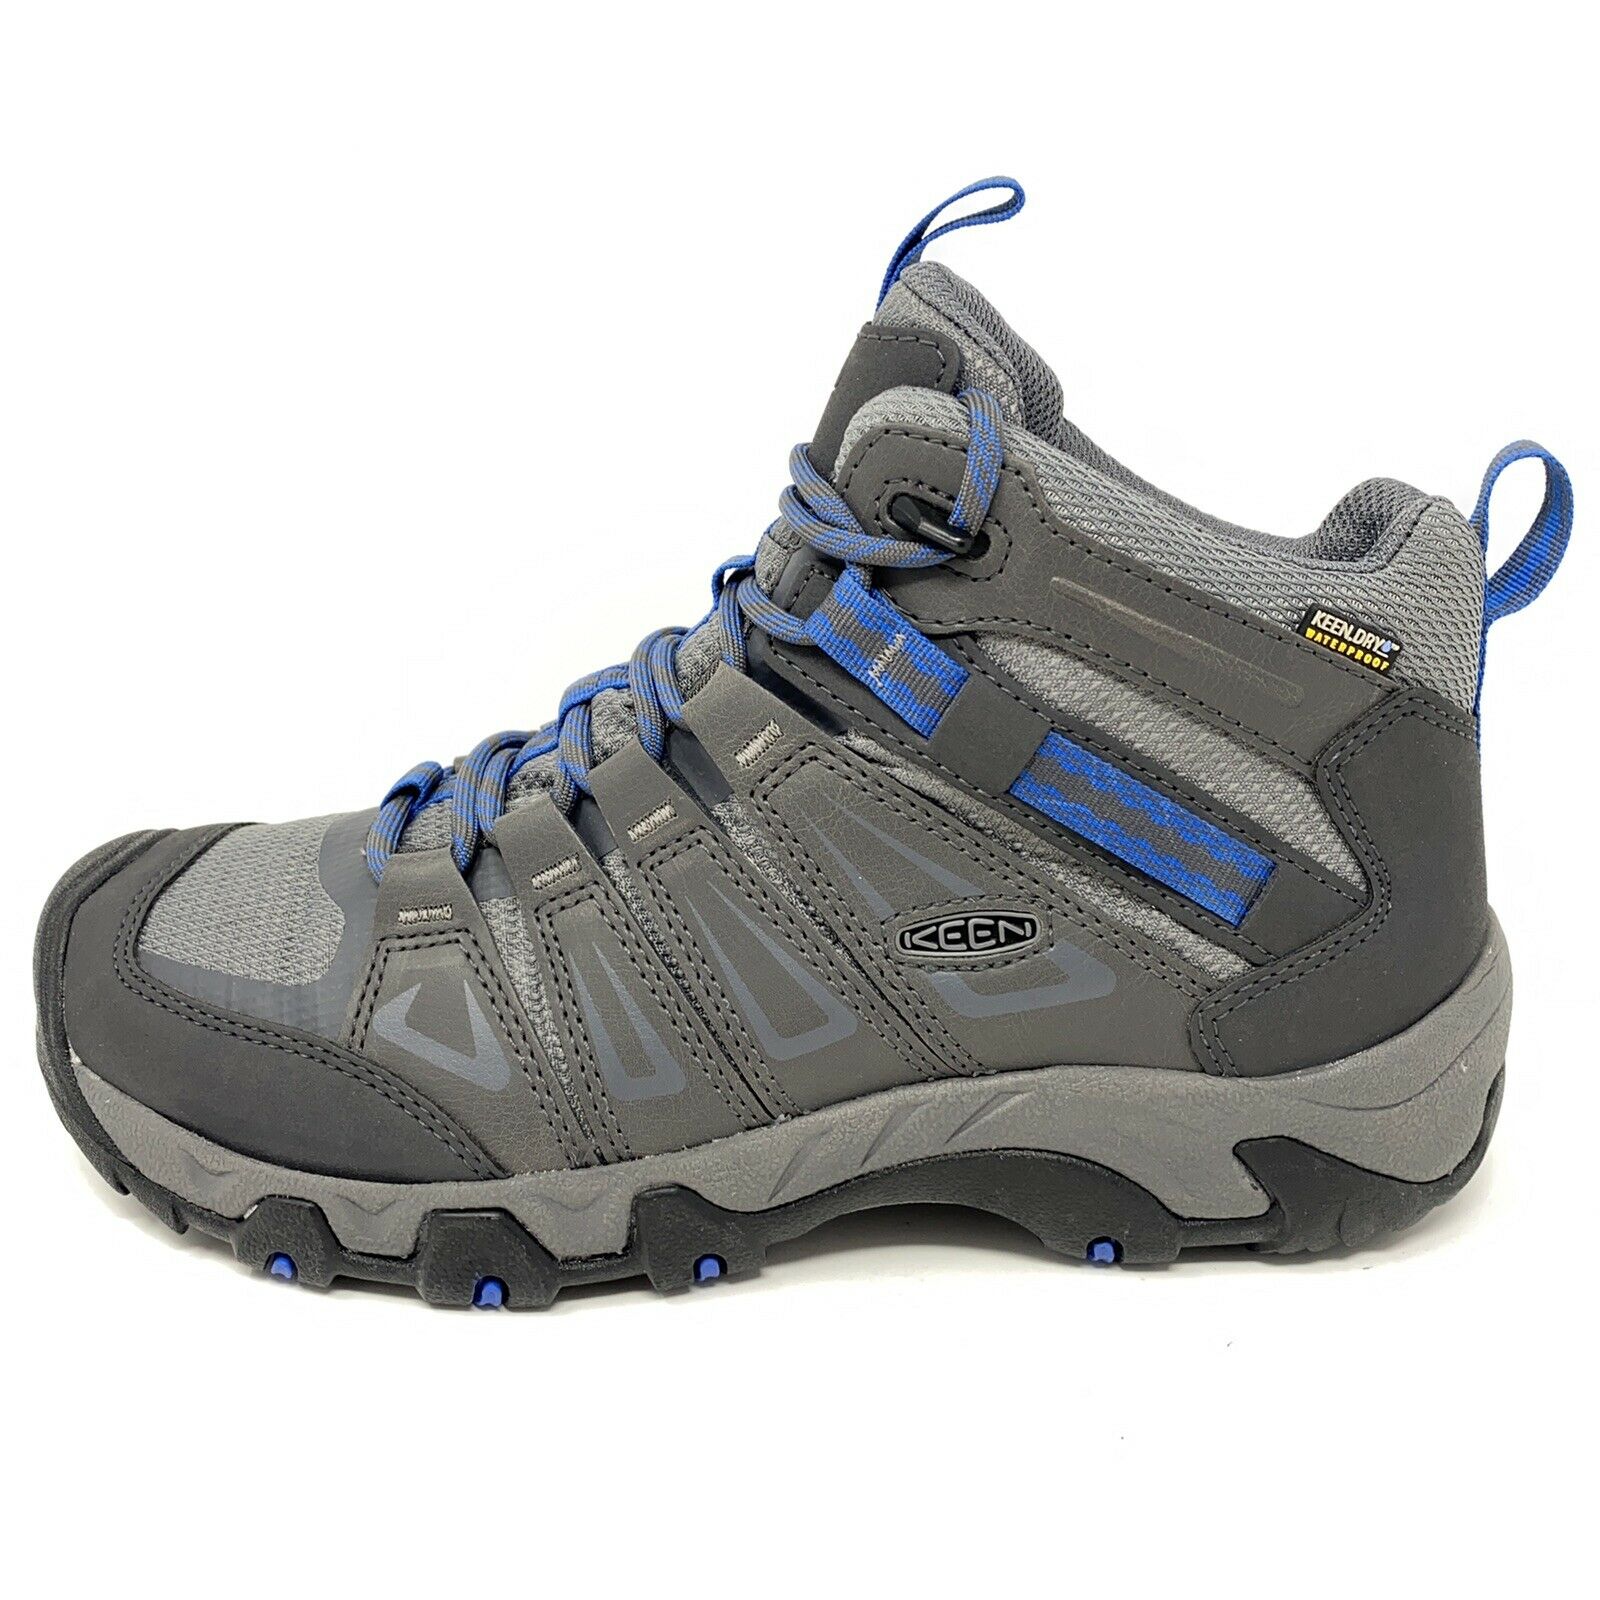 New Men's Keen Oakridge Waterproof Hiking Trail Mid Boots Sz 9 M Gray Blue